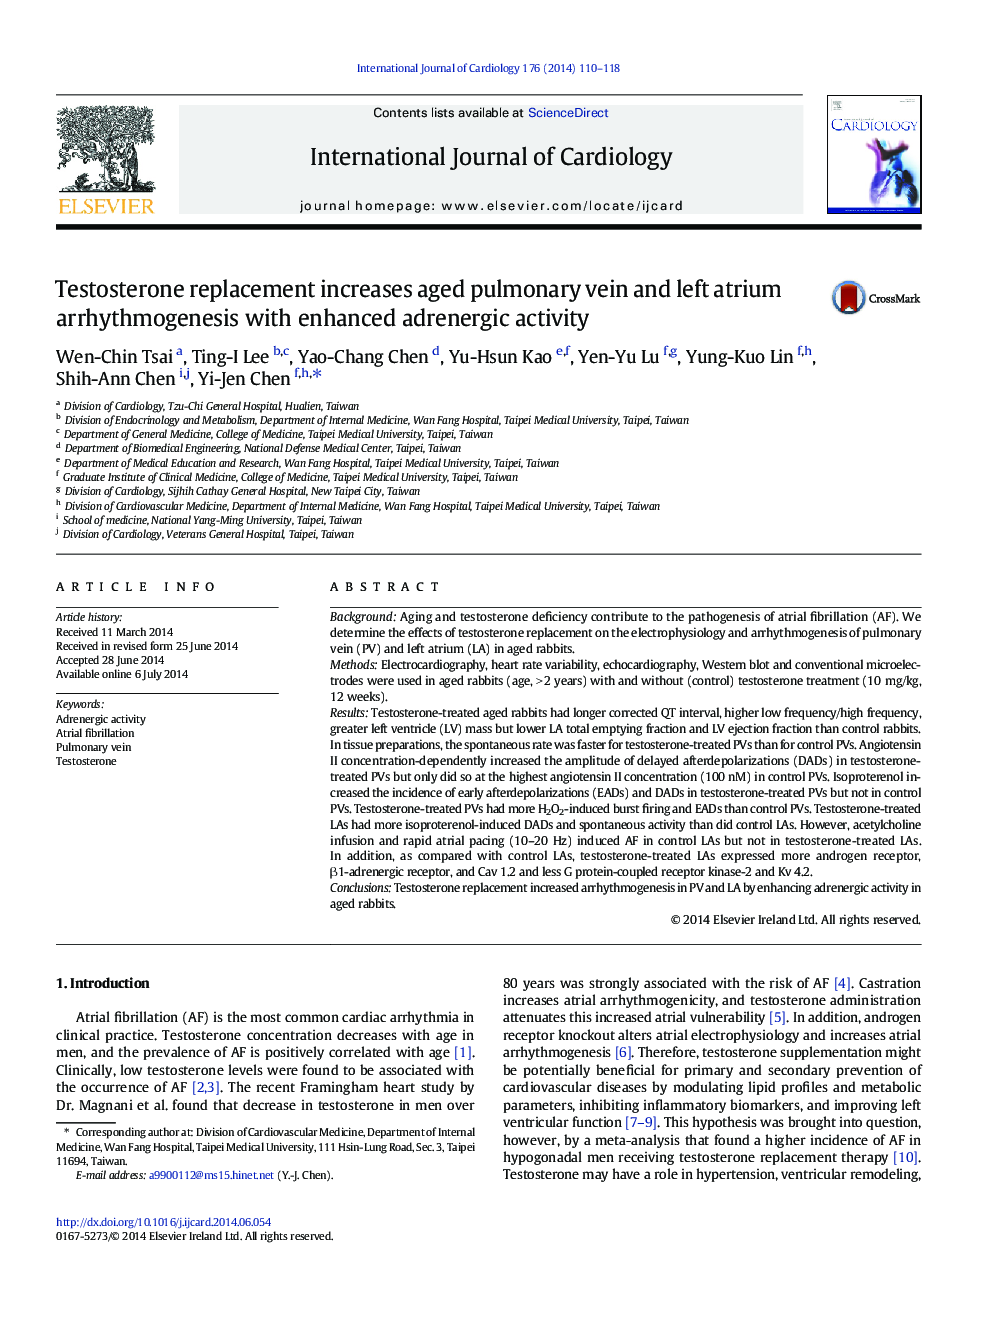 Testosterone replacement increases aged pulmonary vein and left atrium arrhythmogenesis with enhanced adrenergic activity